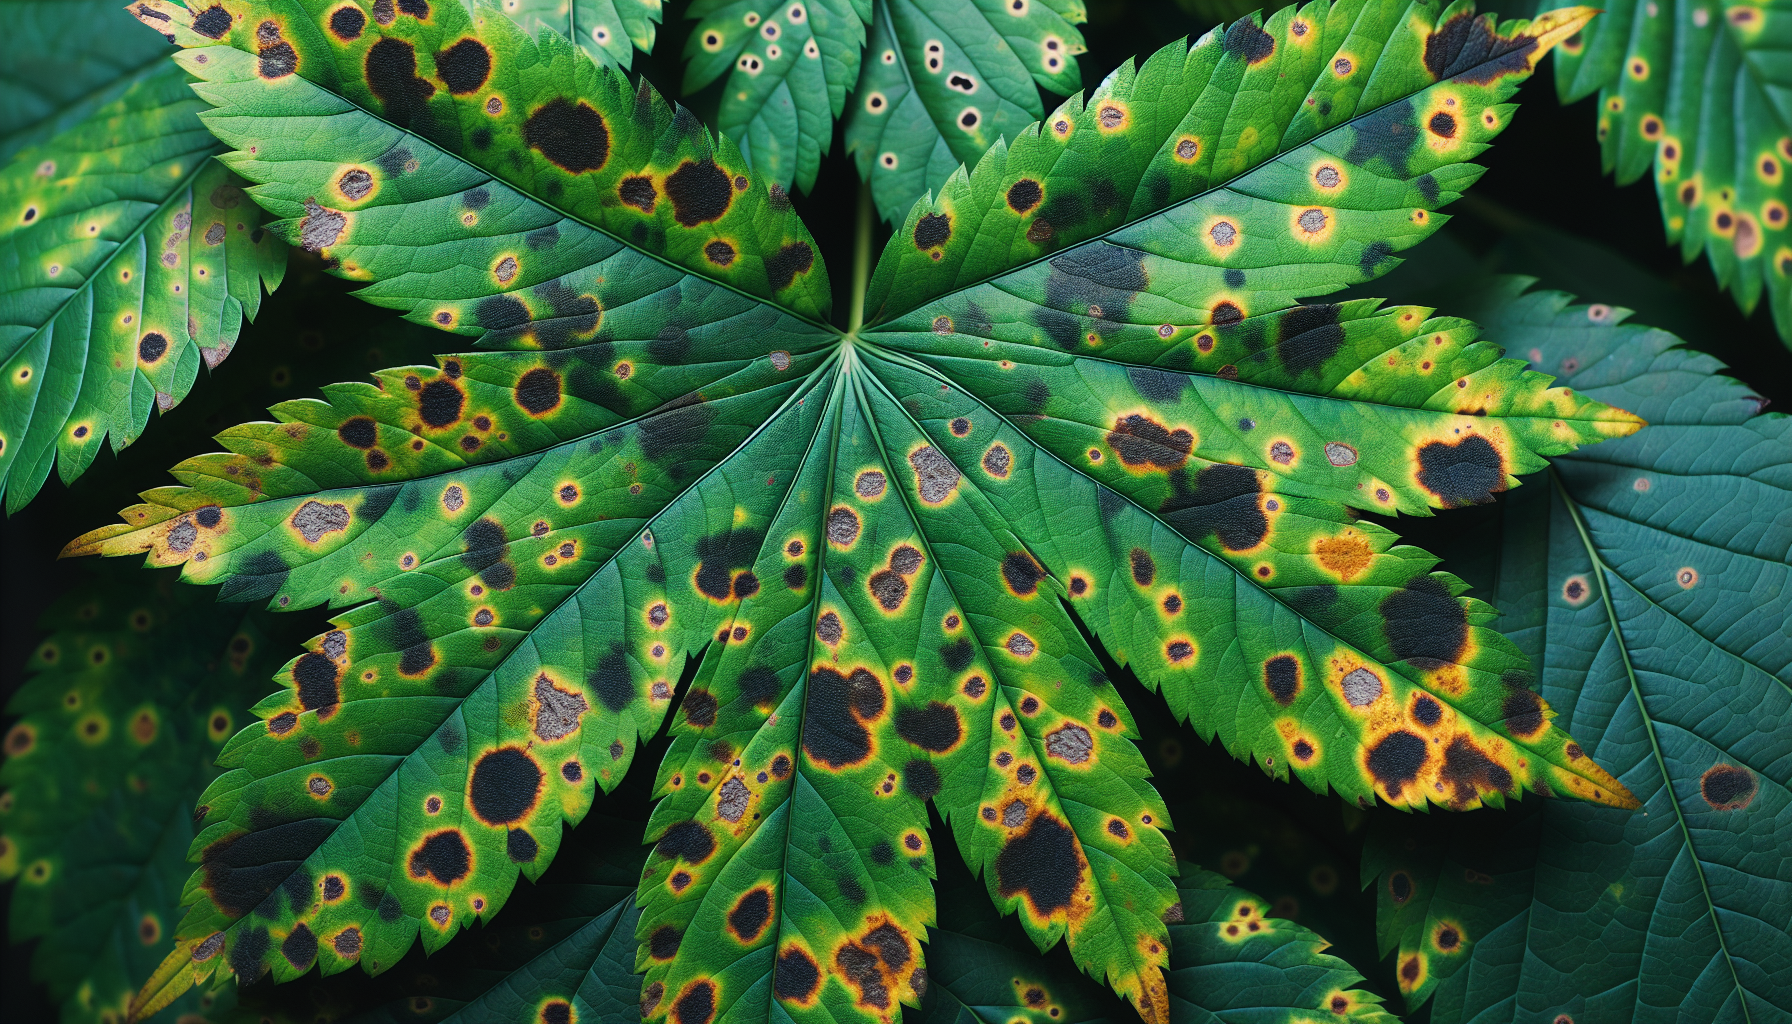 An illustration of leaf spots on a tree